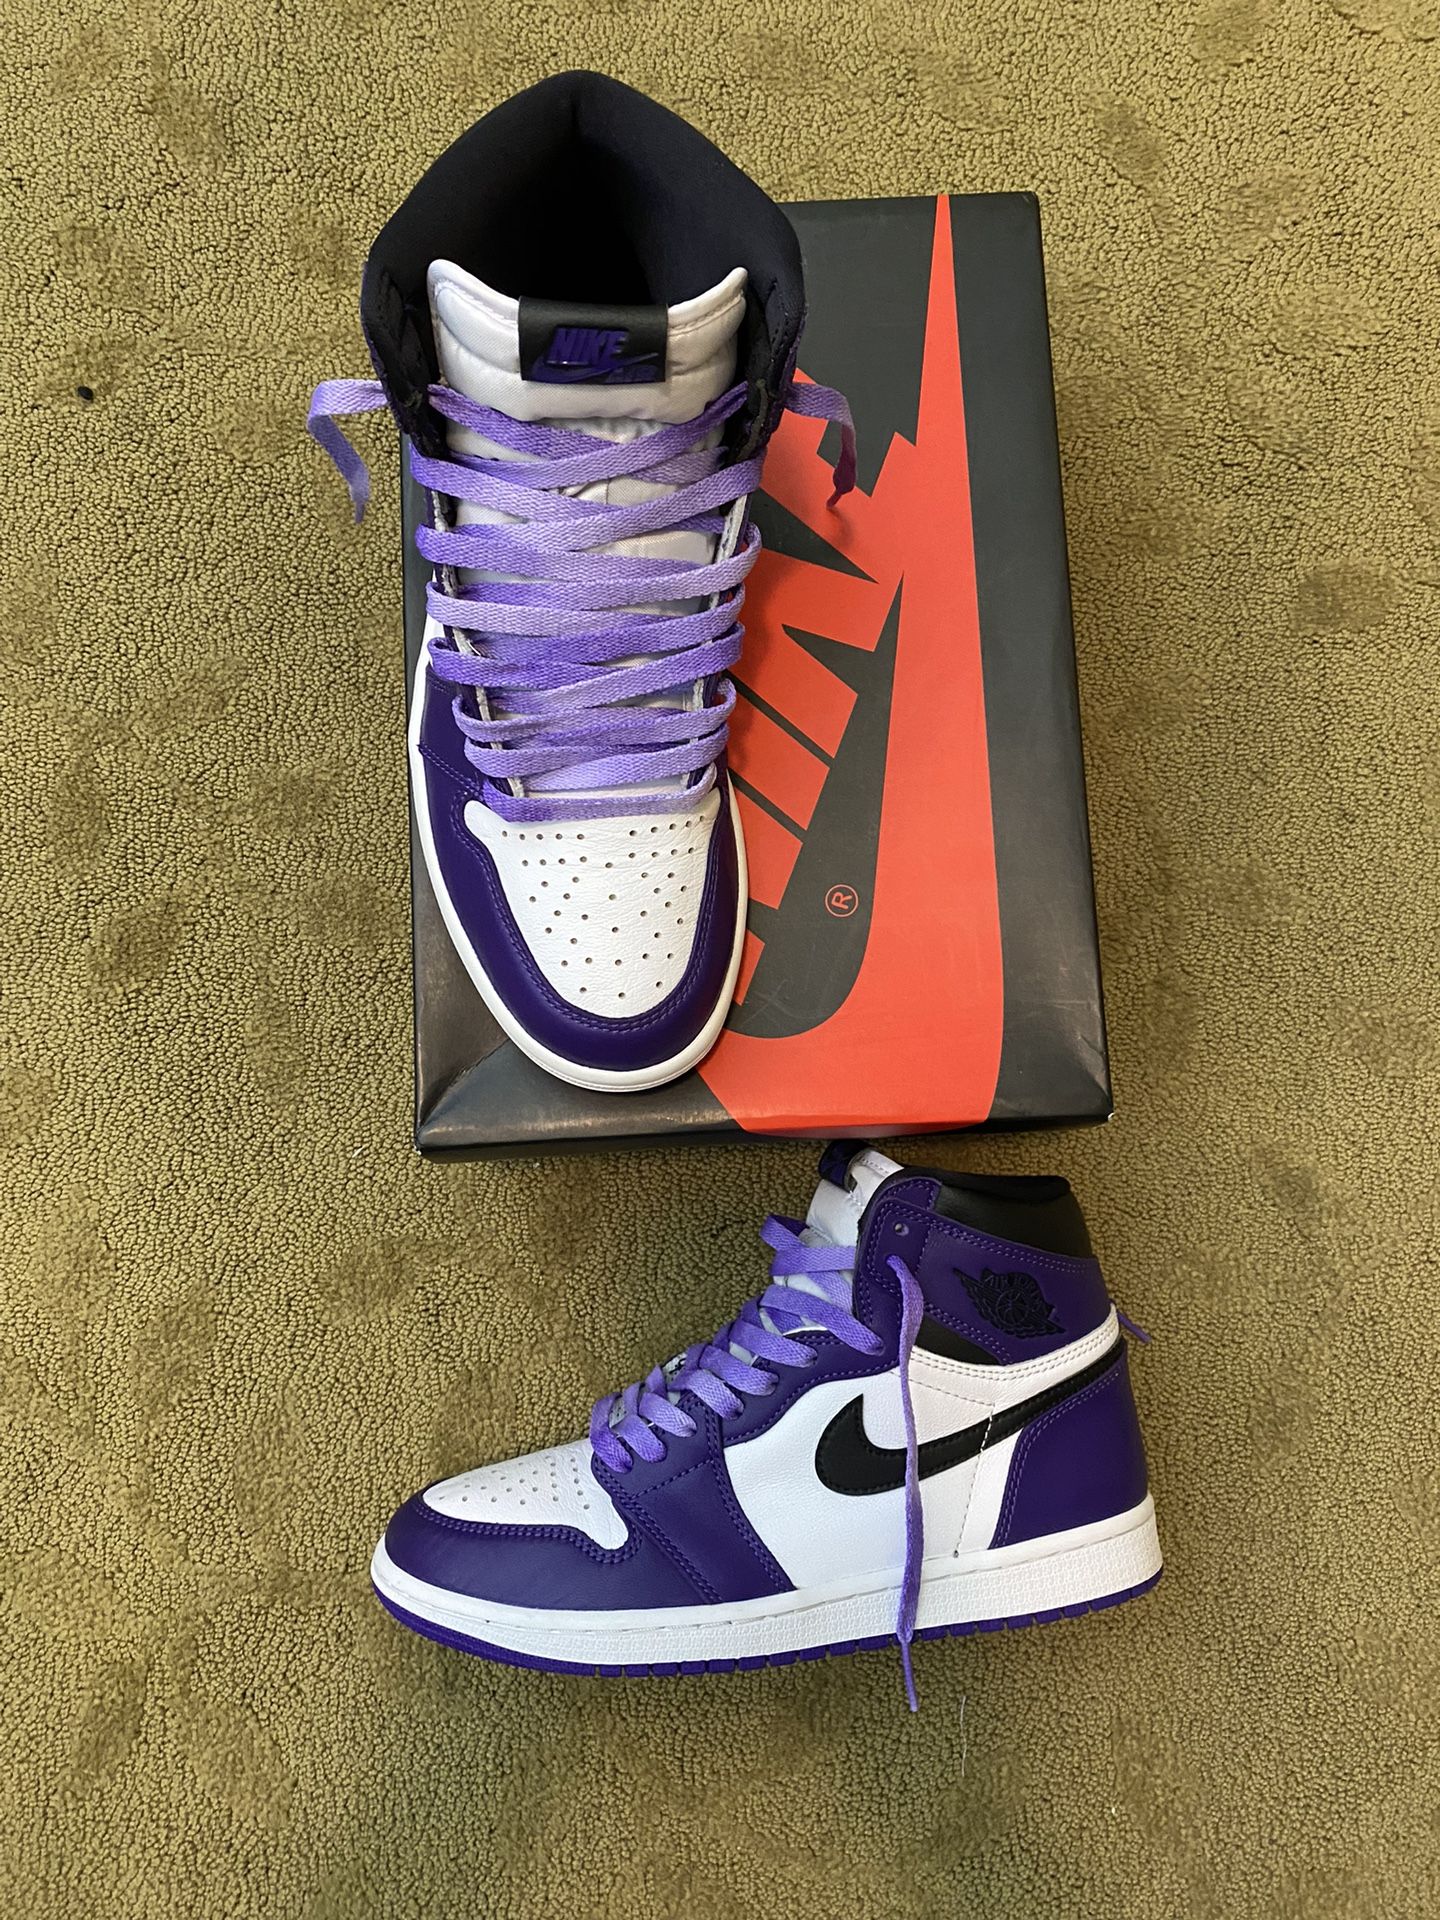 Jordan 1 High Court Purple 2.0